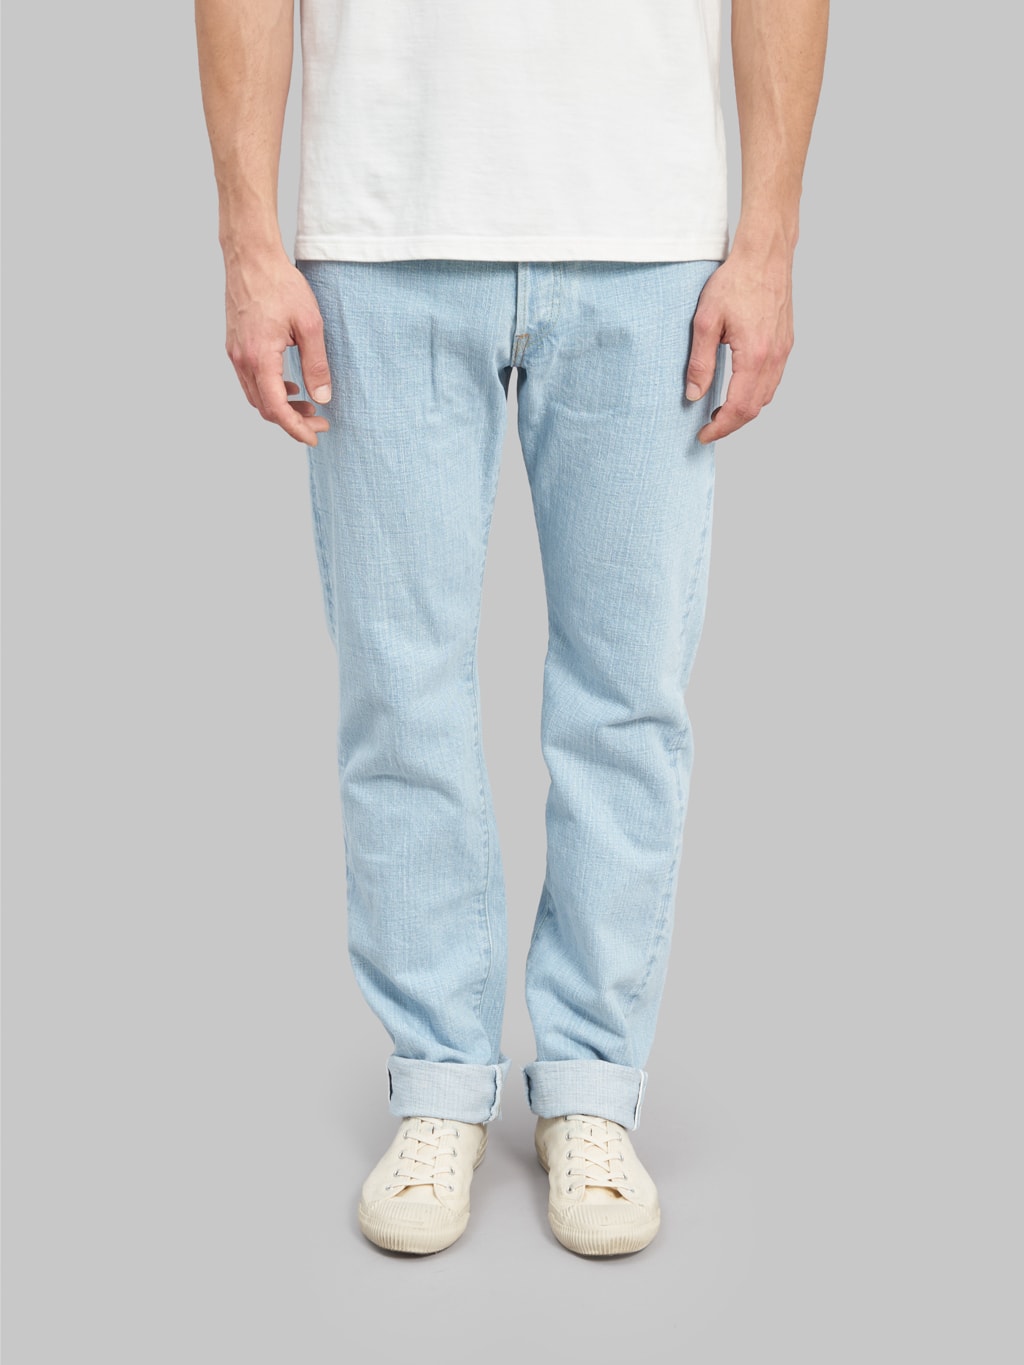 redcast heritage x oni denim kerama blue 15oz selvedge jeans front fit